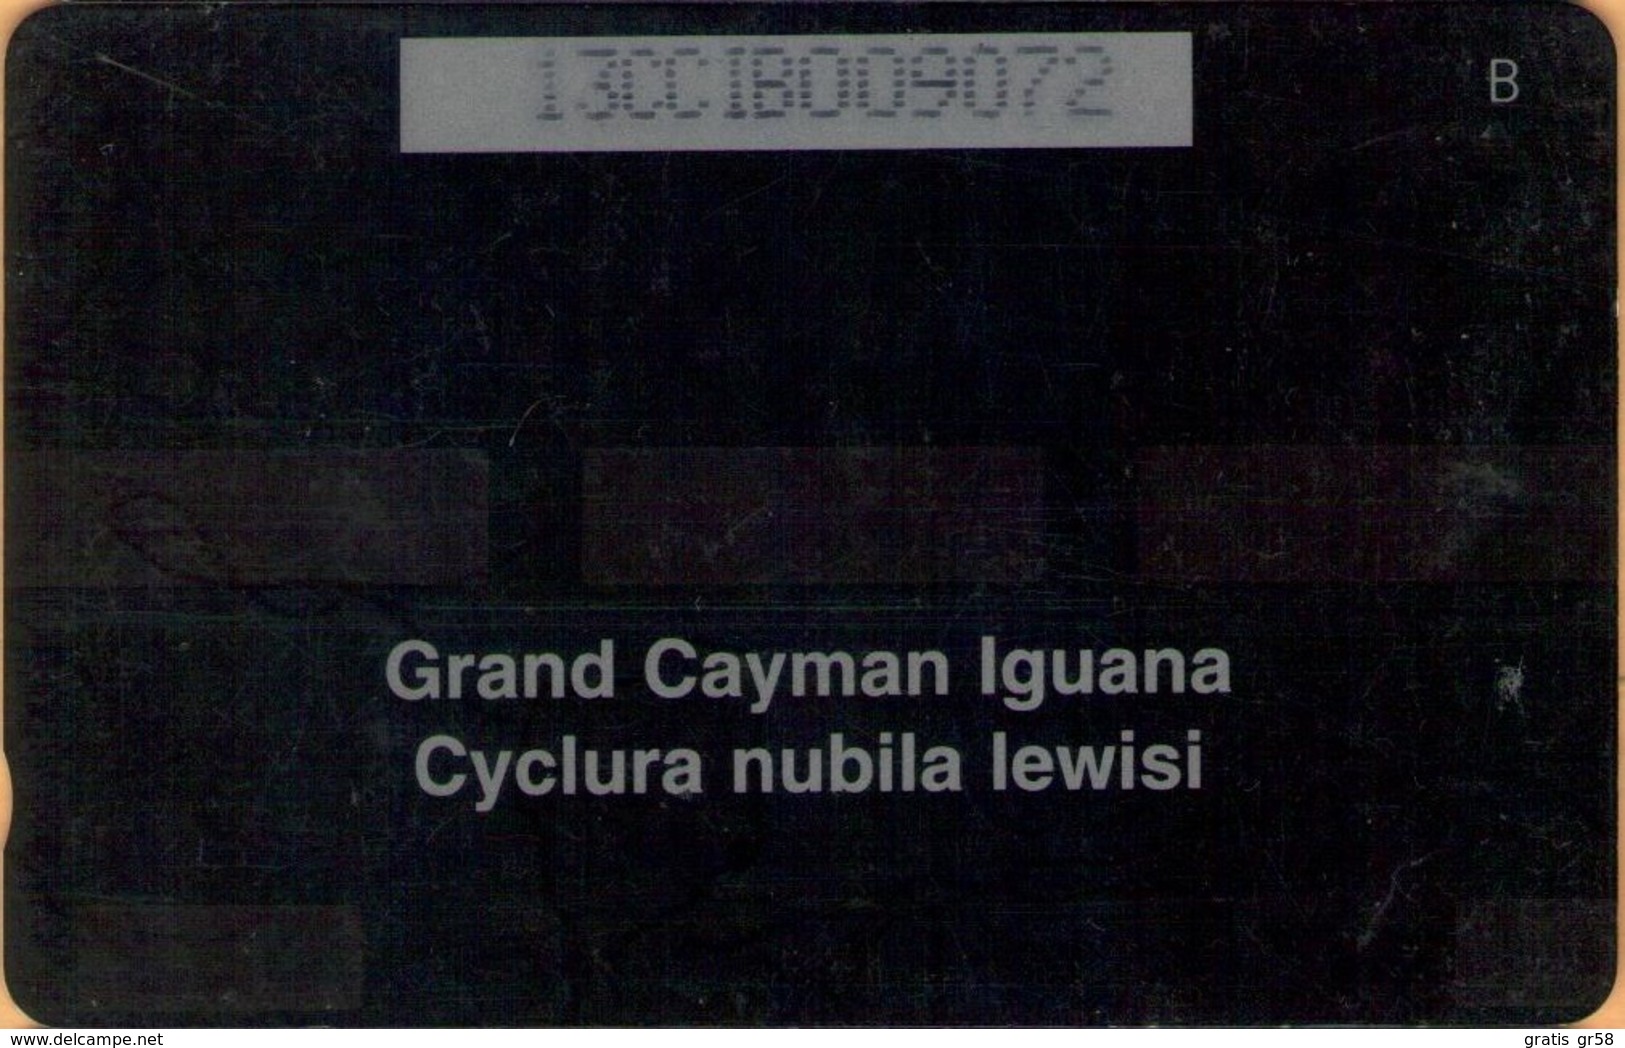 Cayman Island - CAY-13B, GPT, 13CCIB, Cayman Iguana, 10 $, 25.000ex, 1995, Used - Kaimaninseln (Cayman I.)